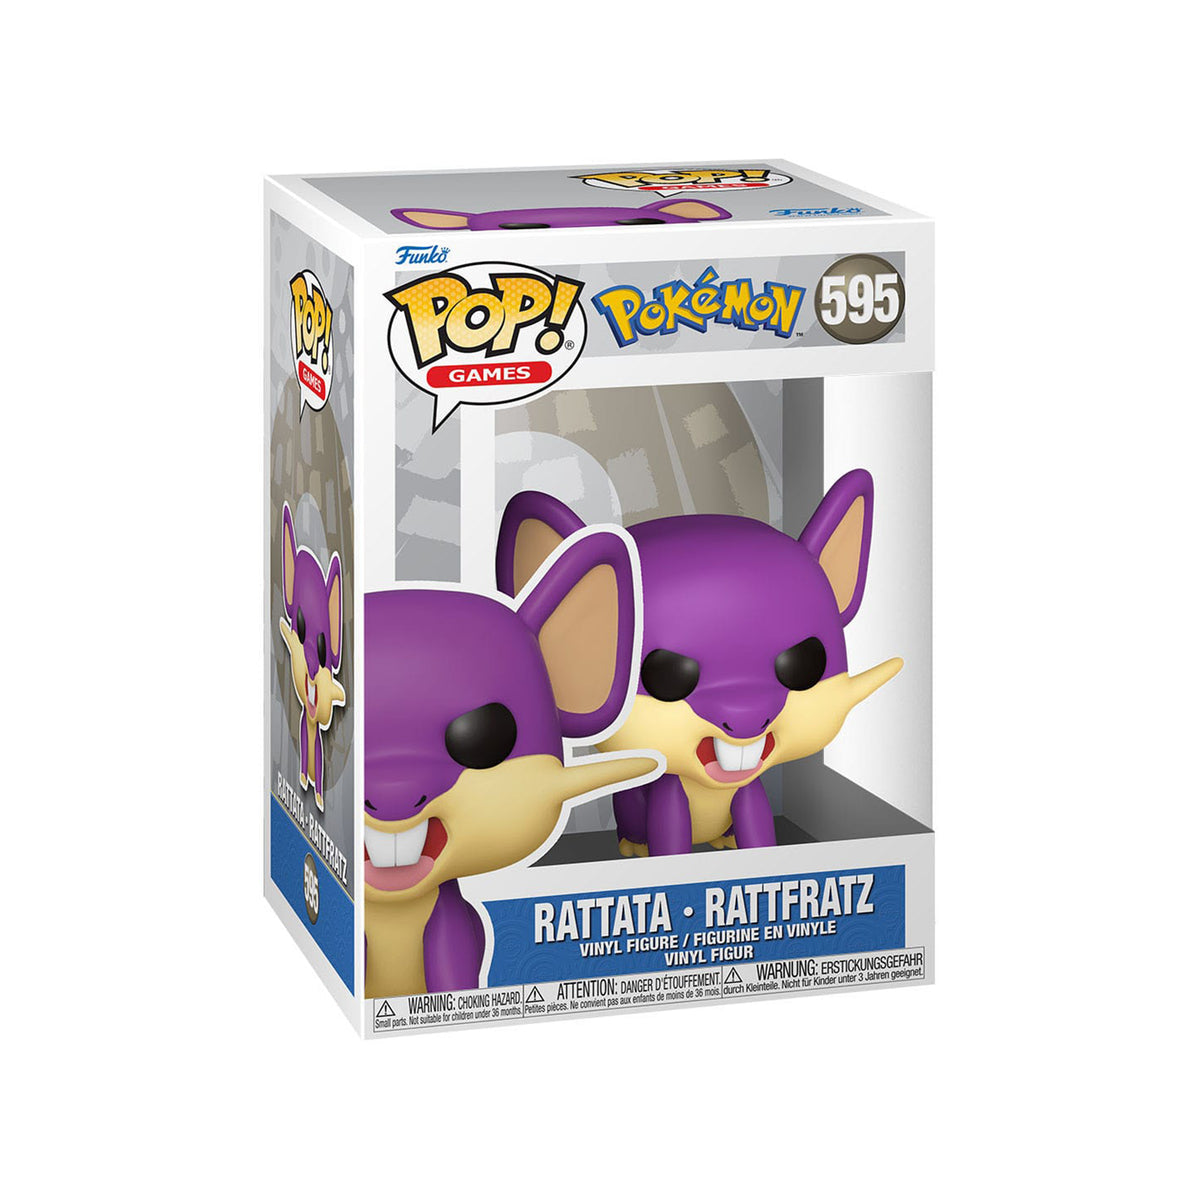 Rattfratz - Pokemon - Funko POP!